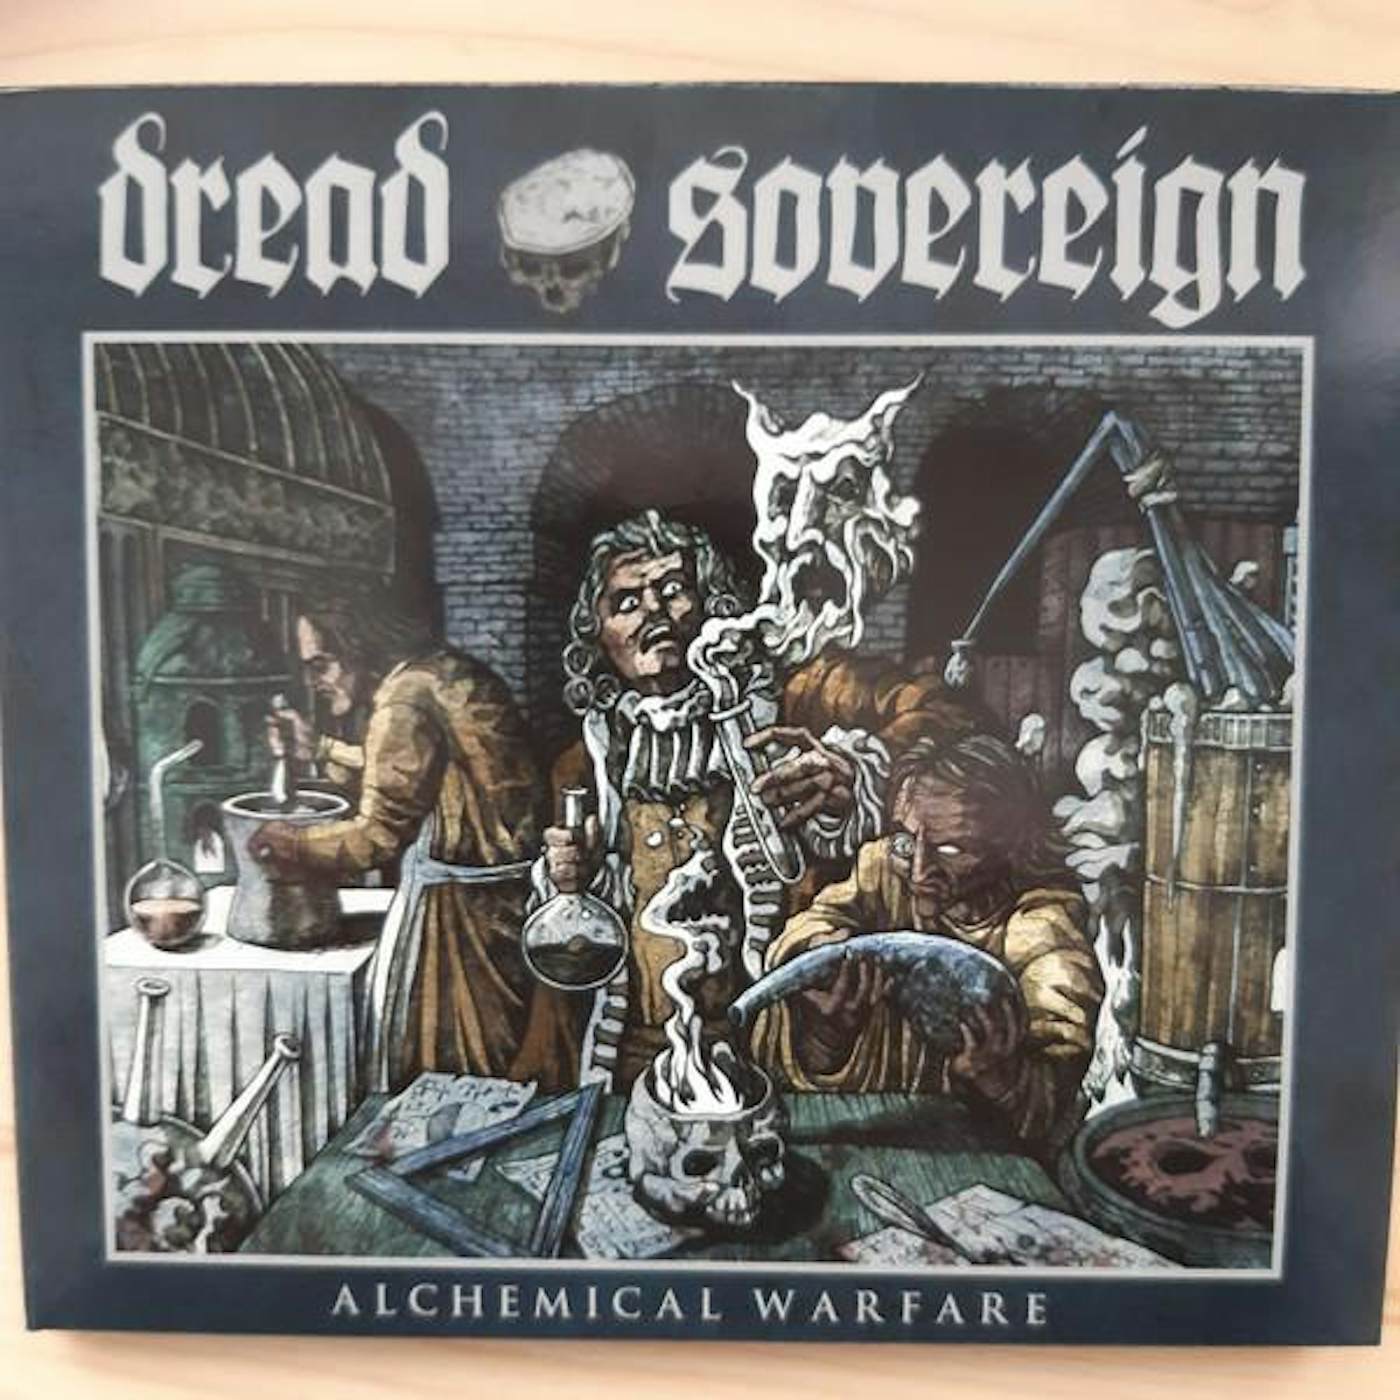 Dread Sovereign ALCHEMICAL WARFARE CD